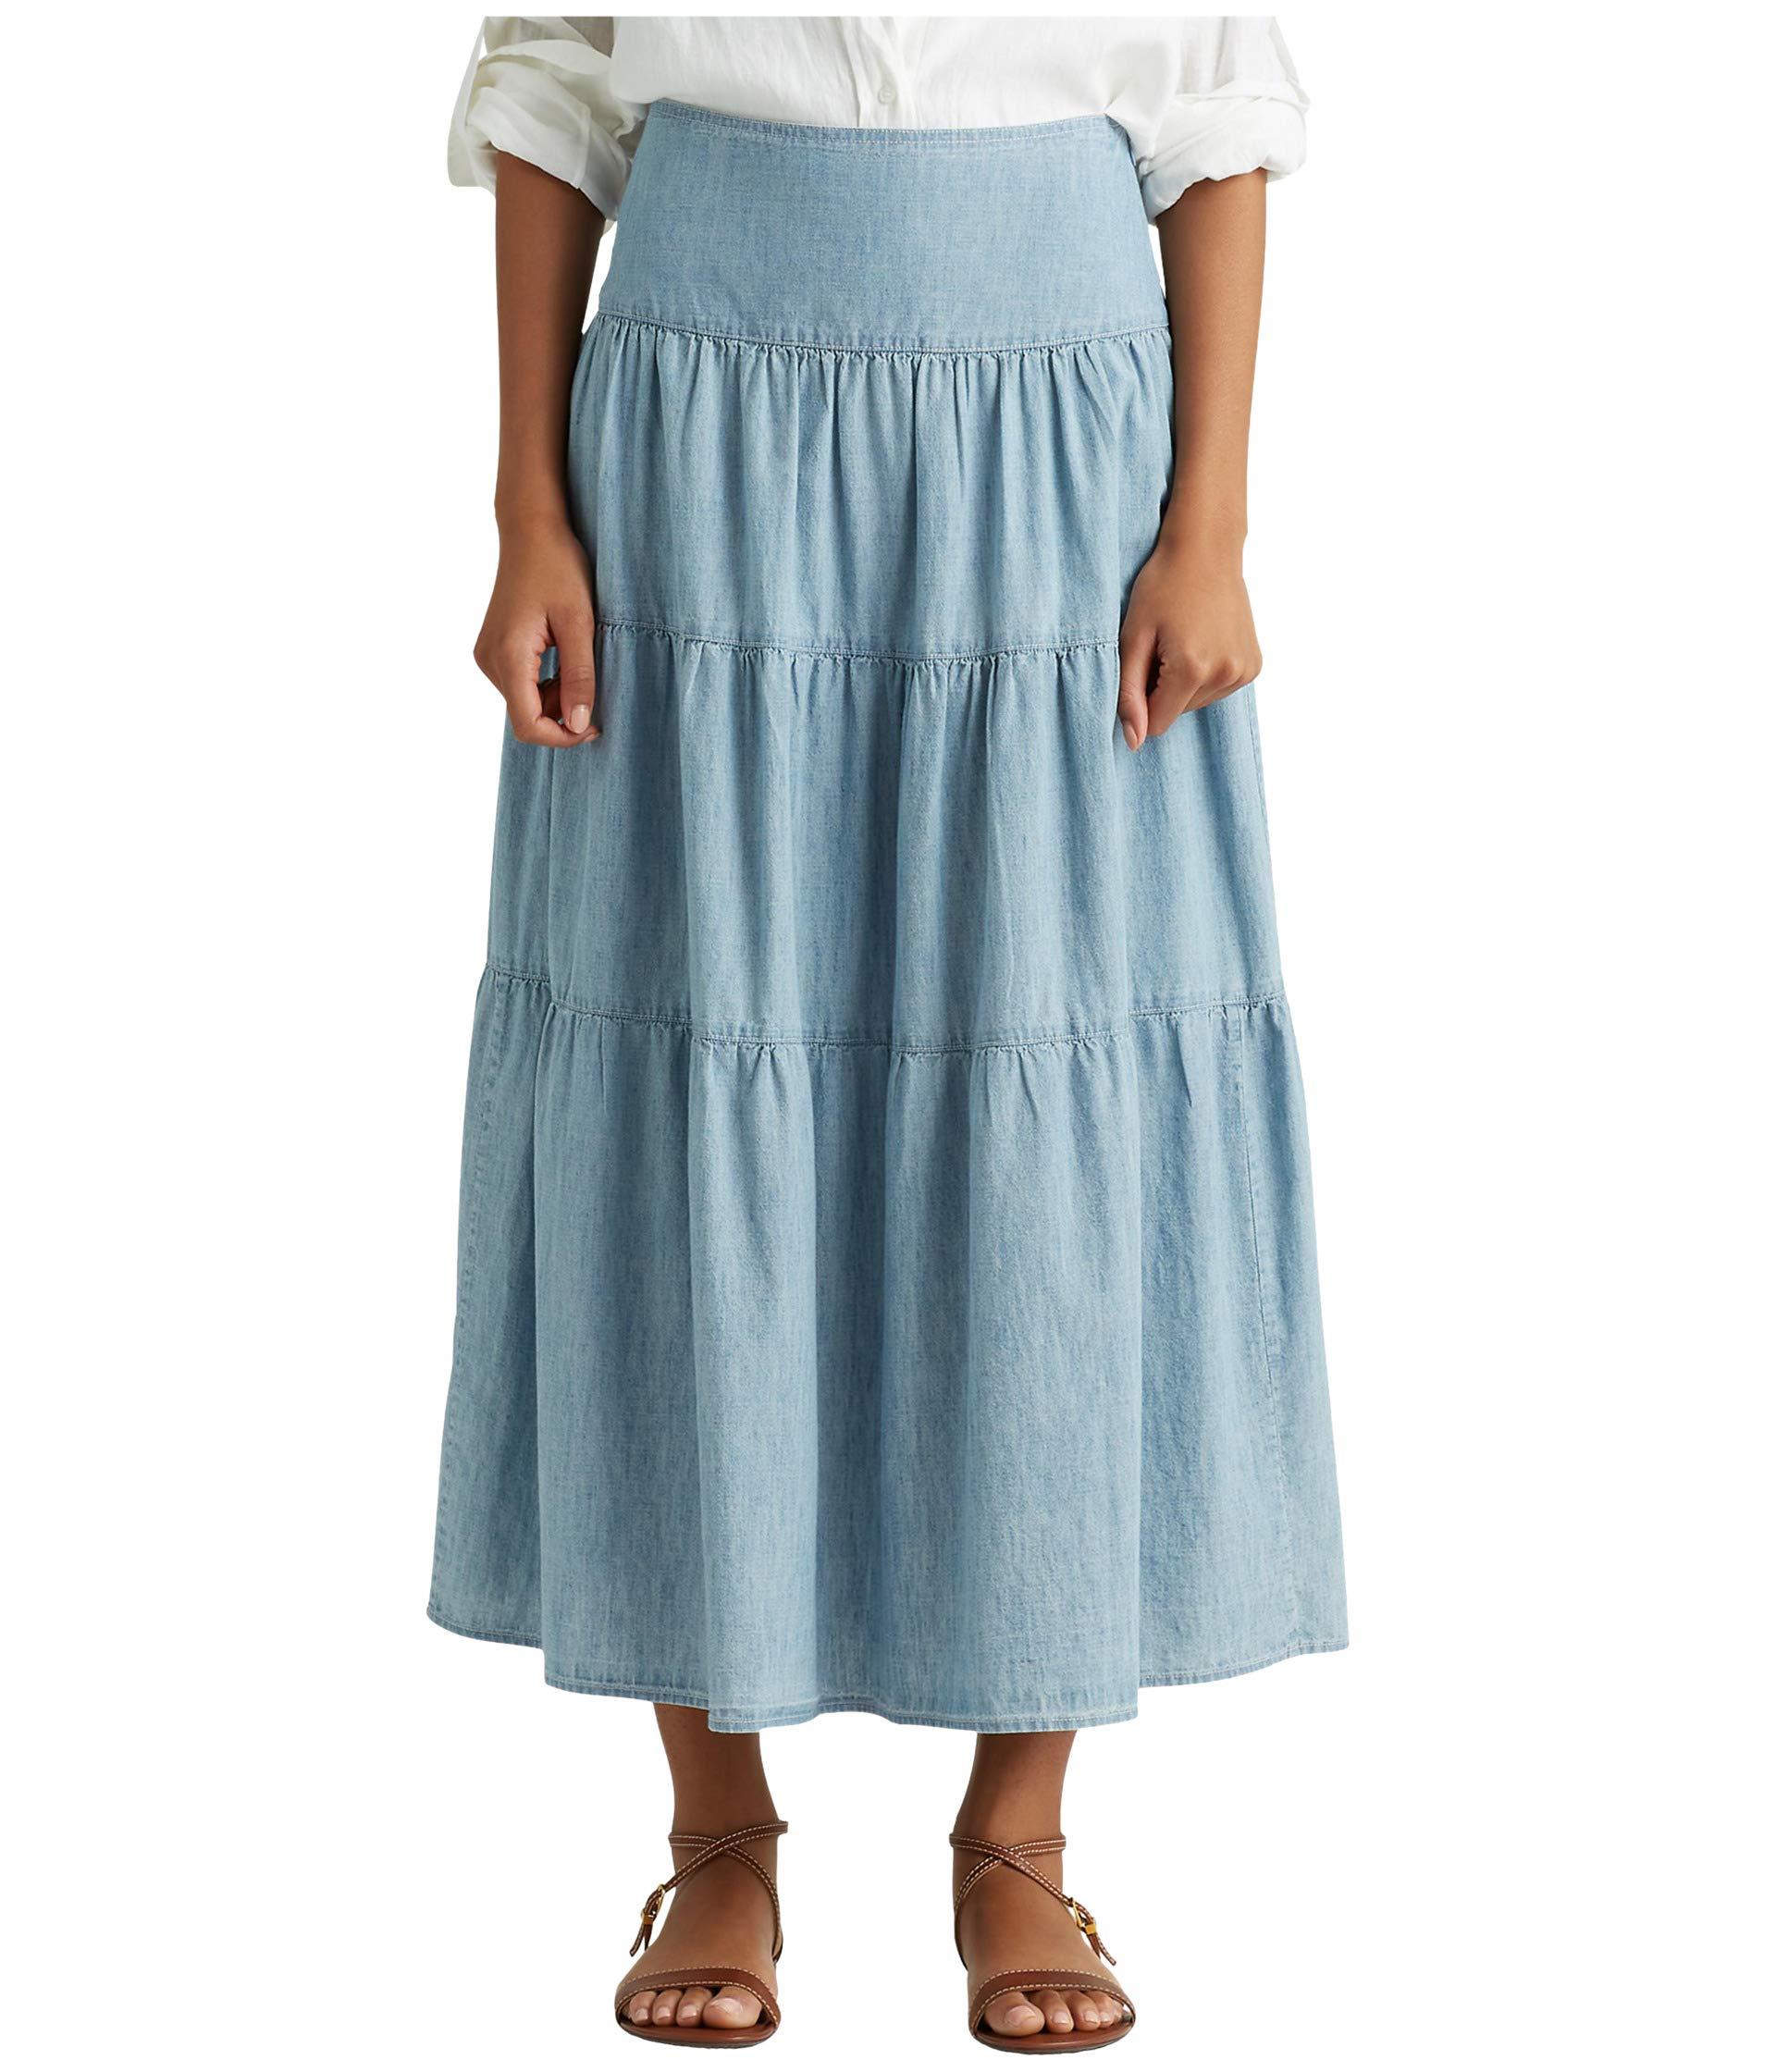 Lauren by Ralph Lauren Sleeveless Sequined A-Line Dress in 